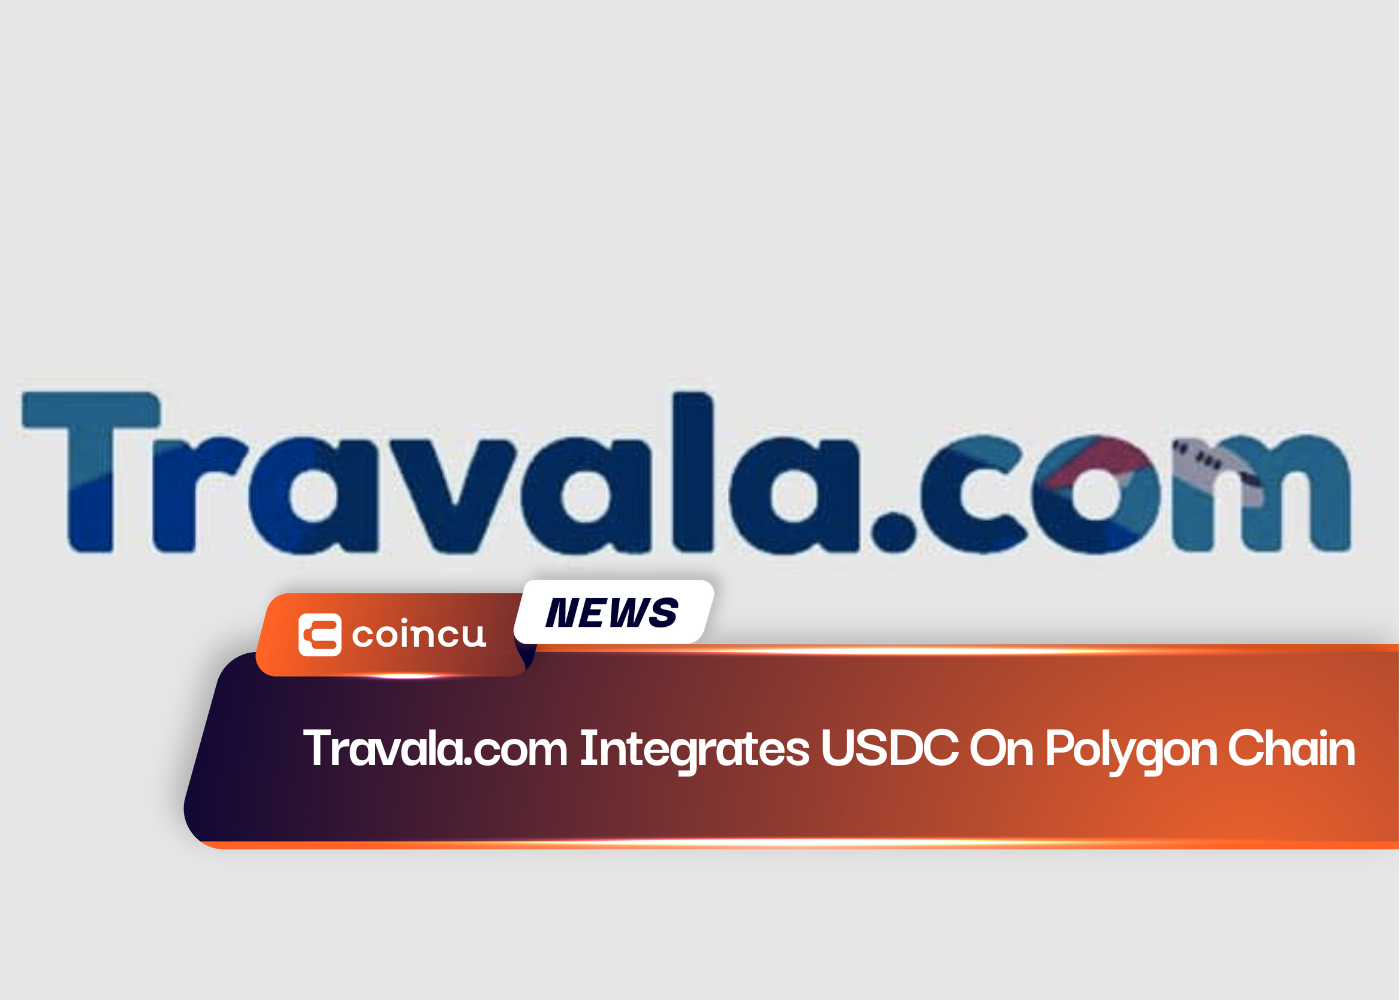 Travala.com Integrates USDC On Polygon Chain